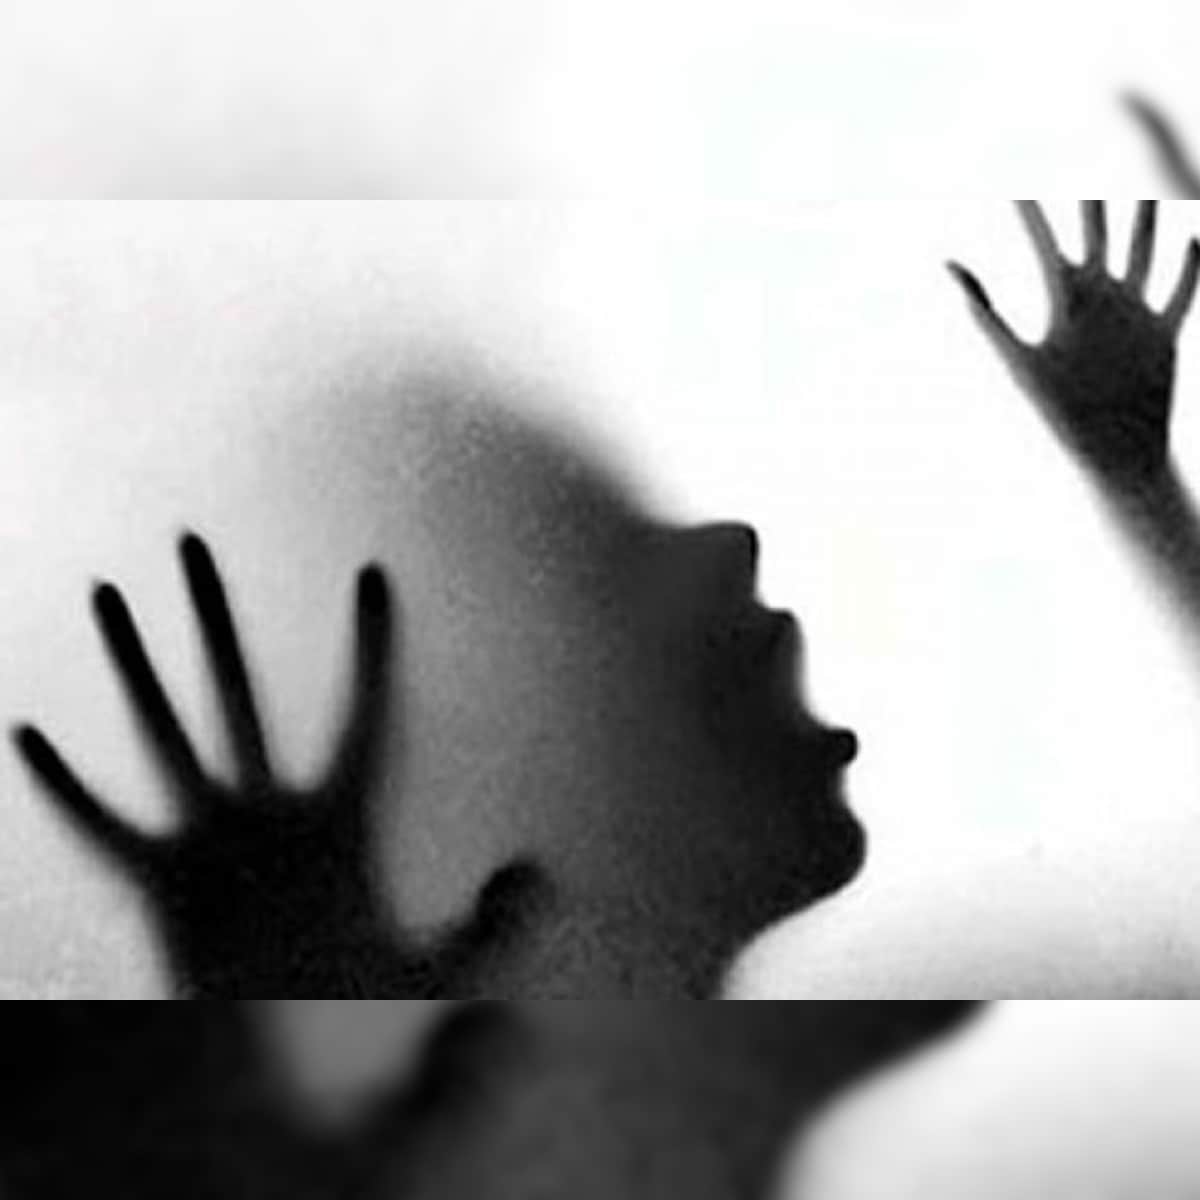 Litil Boy Sex - 10-year-old Boy Injured After Minor Girl Forces Sex in Kanpur